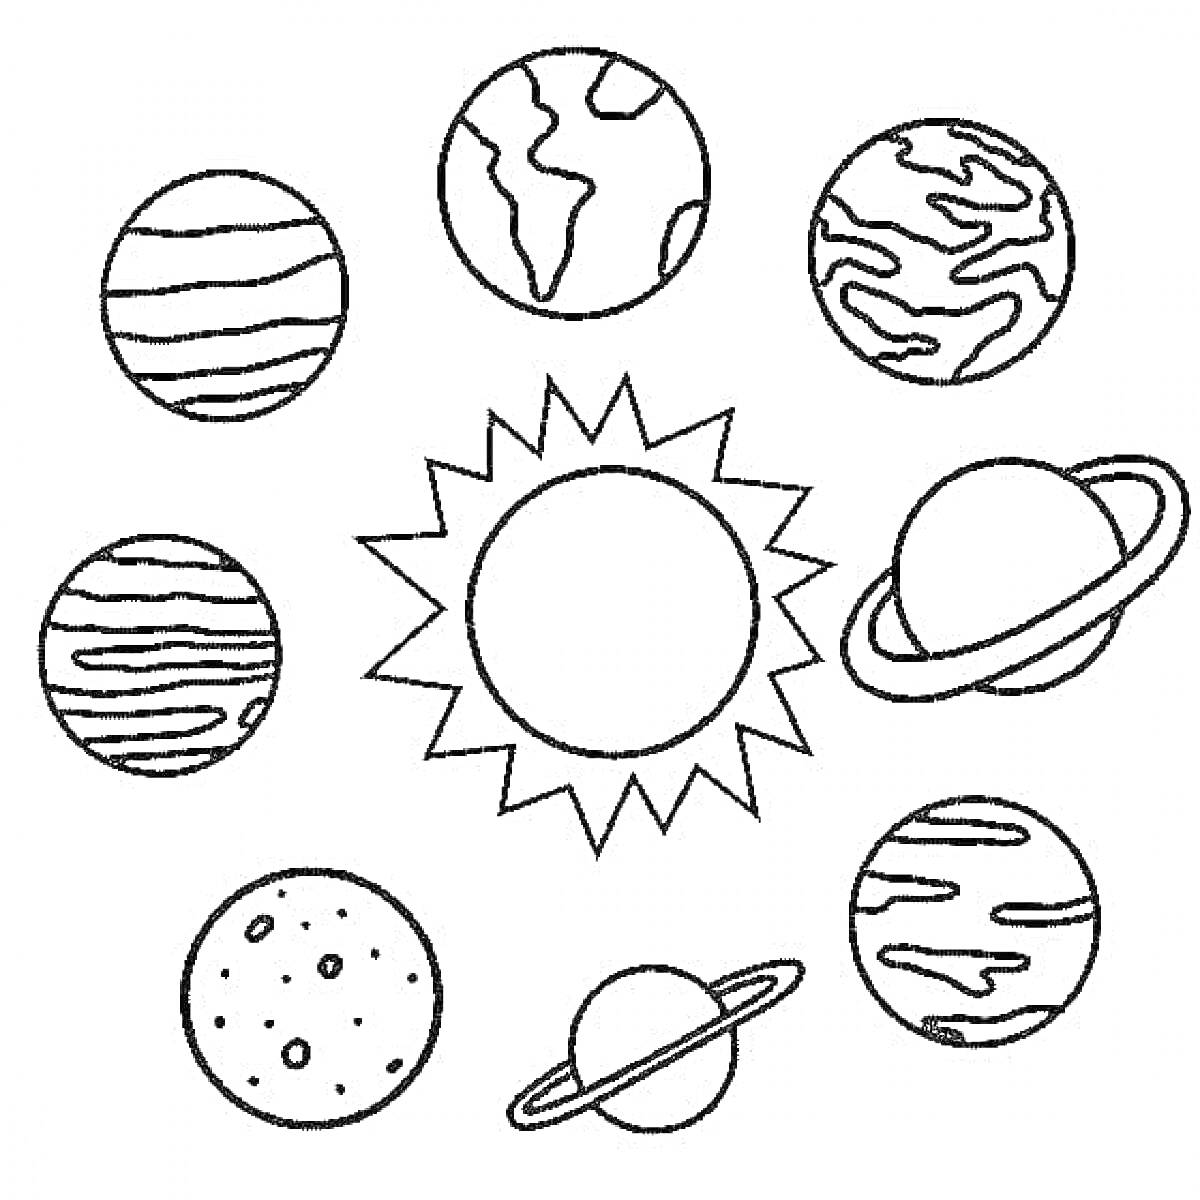 Раскраска Солнечная система с планетами Меркурий, Венера, Земля, Марс, Юпитер, Сатурн, Уран, Нептун и Солнце